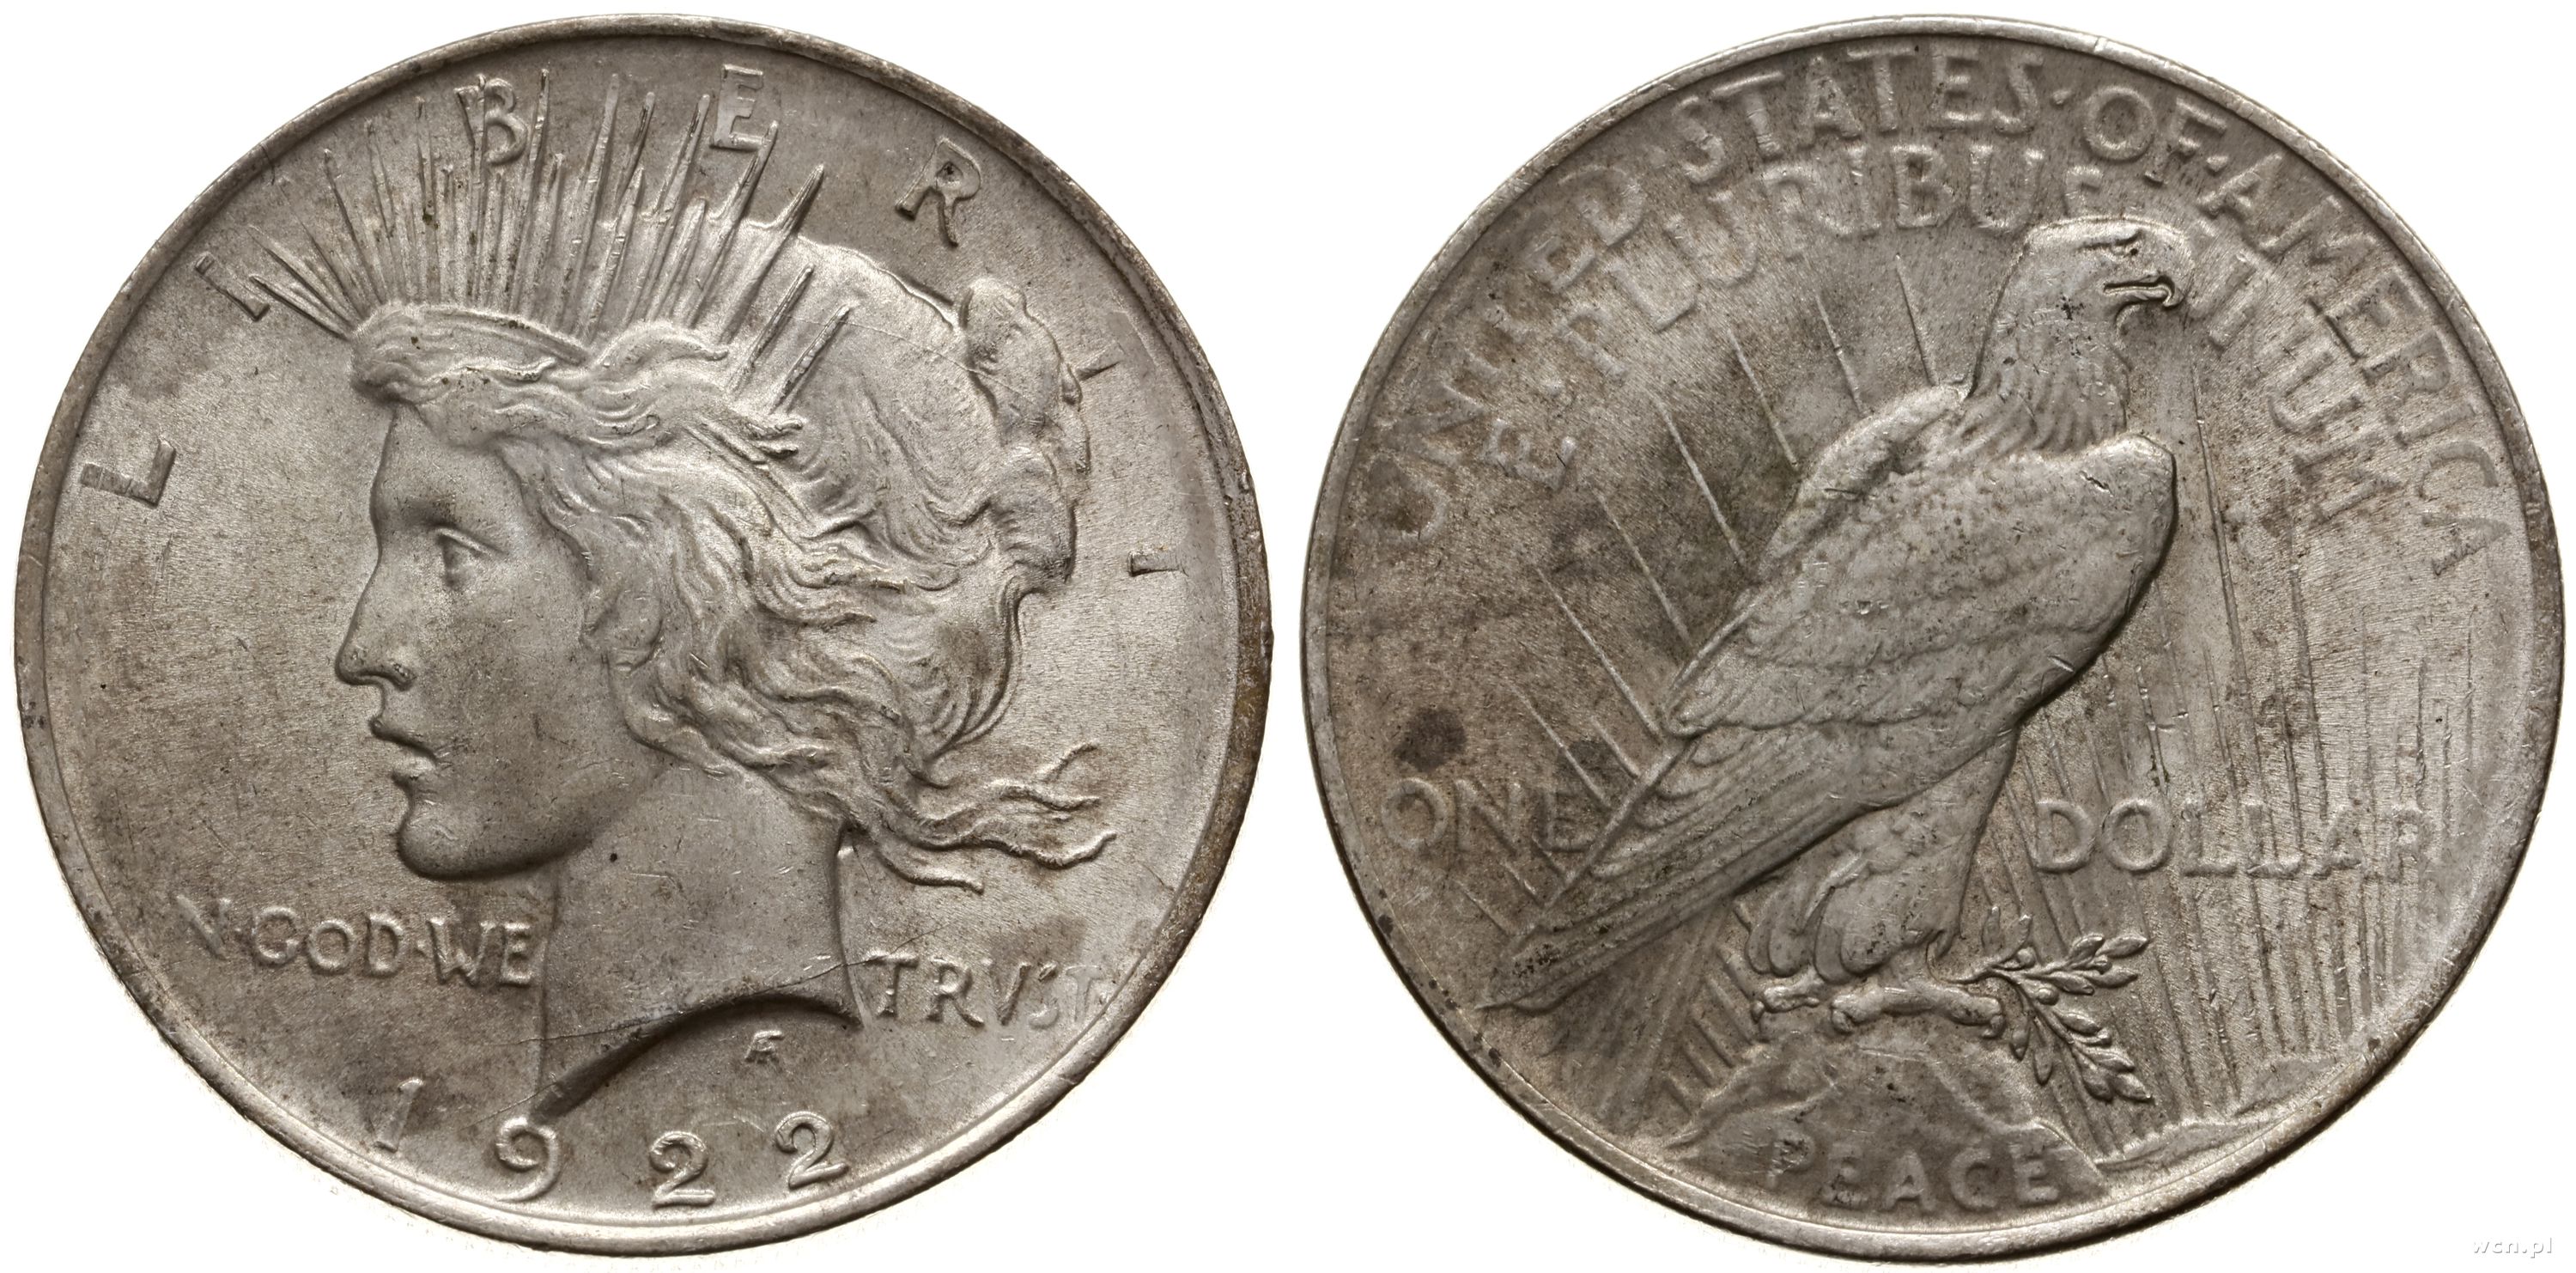 Купить монеты доллары сша. Peace Dollar 1921. Монета 1 доллар США 1922. Серебряный доллар монета 1923 года. Серебряный доллар США.